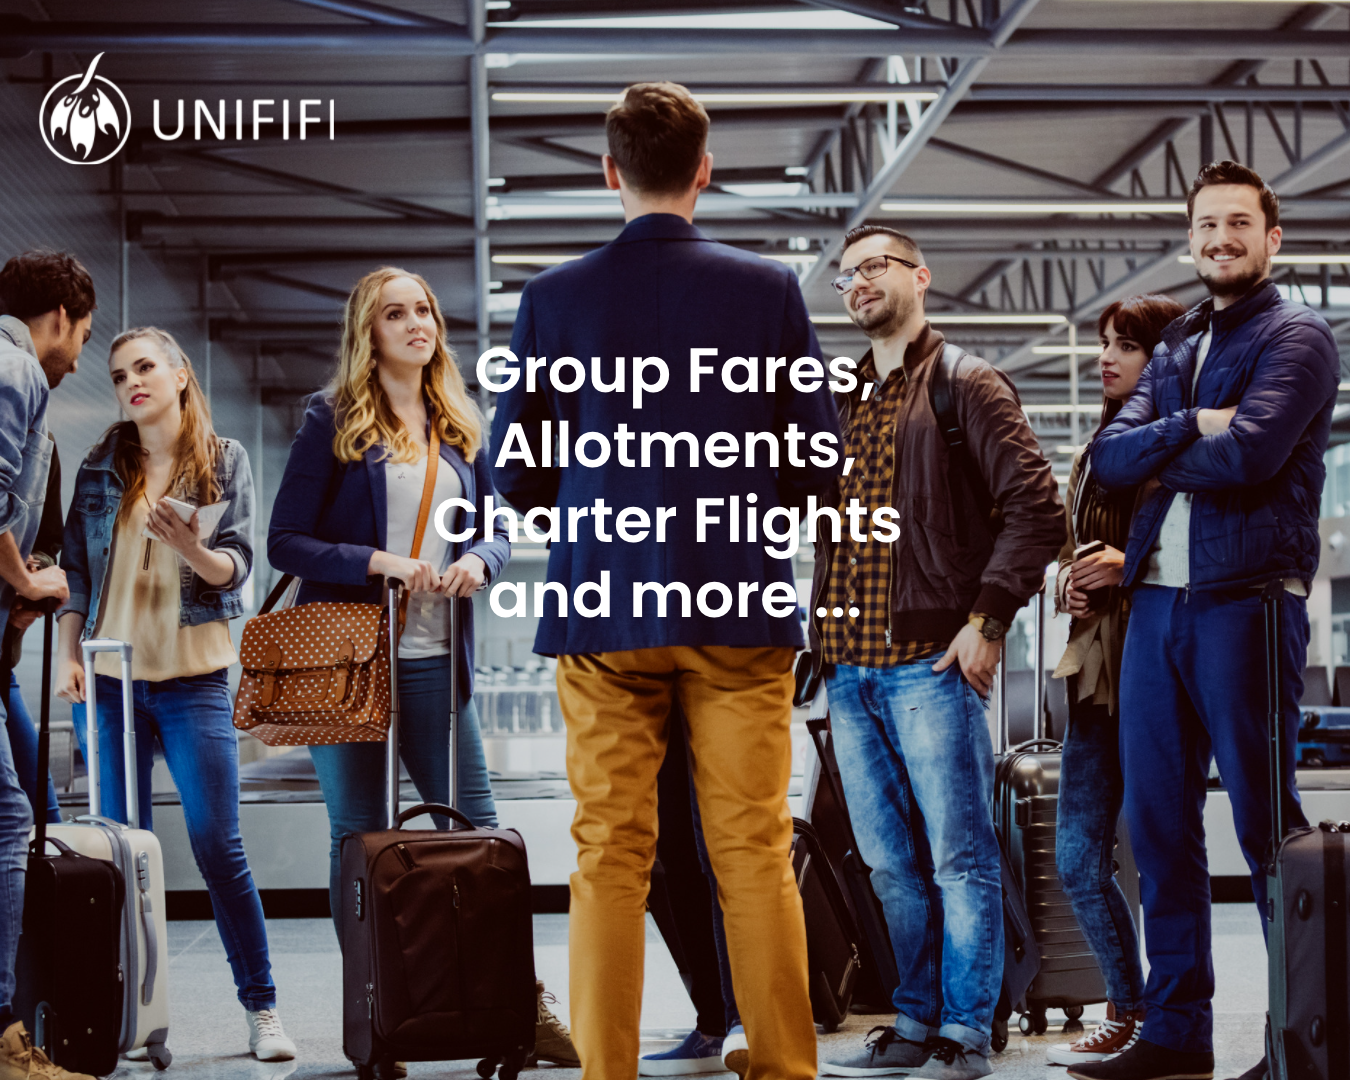 Unififi Web Square Images_UNIFIFI Airline